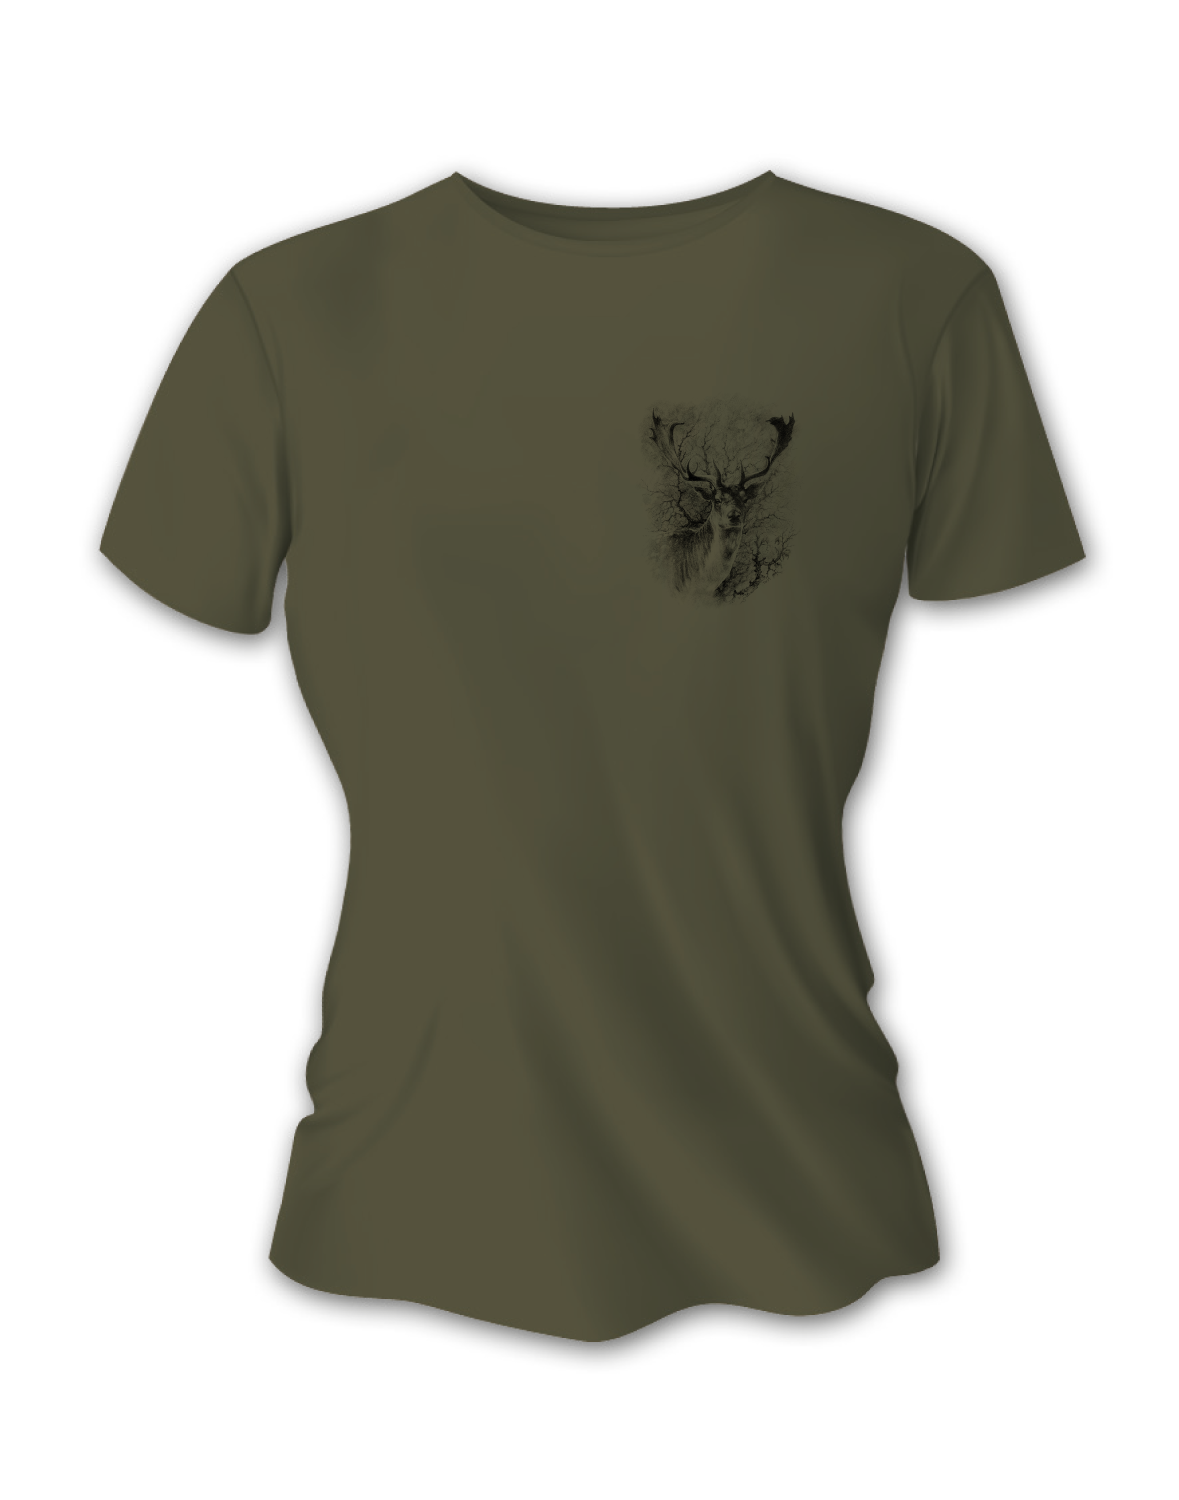 Dámske poľovnícke tričko TETRAO daniel malý - zelené   S